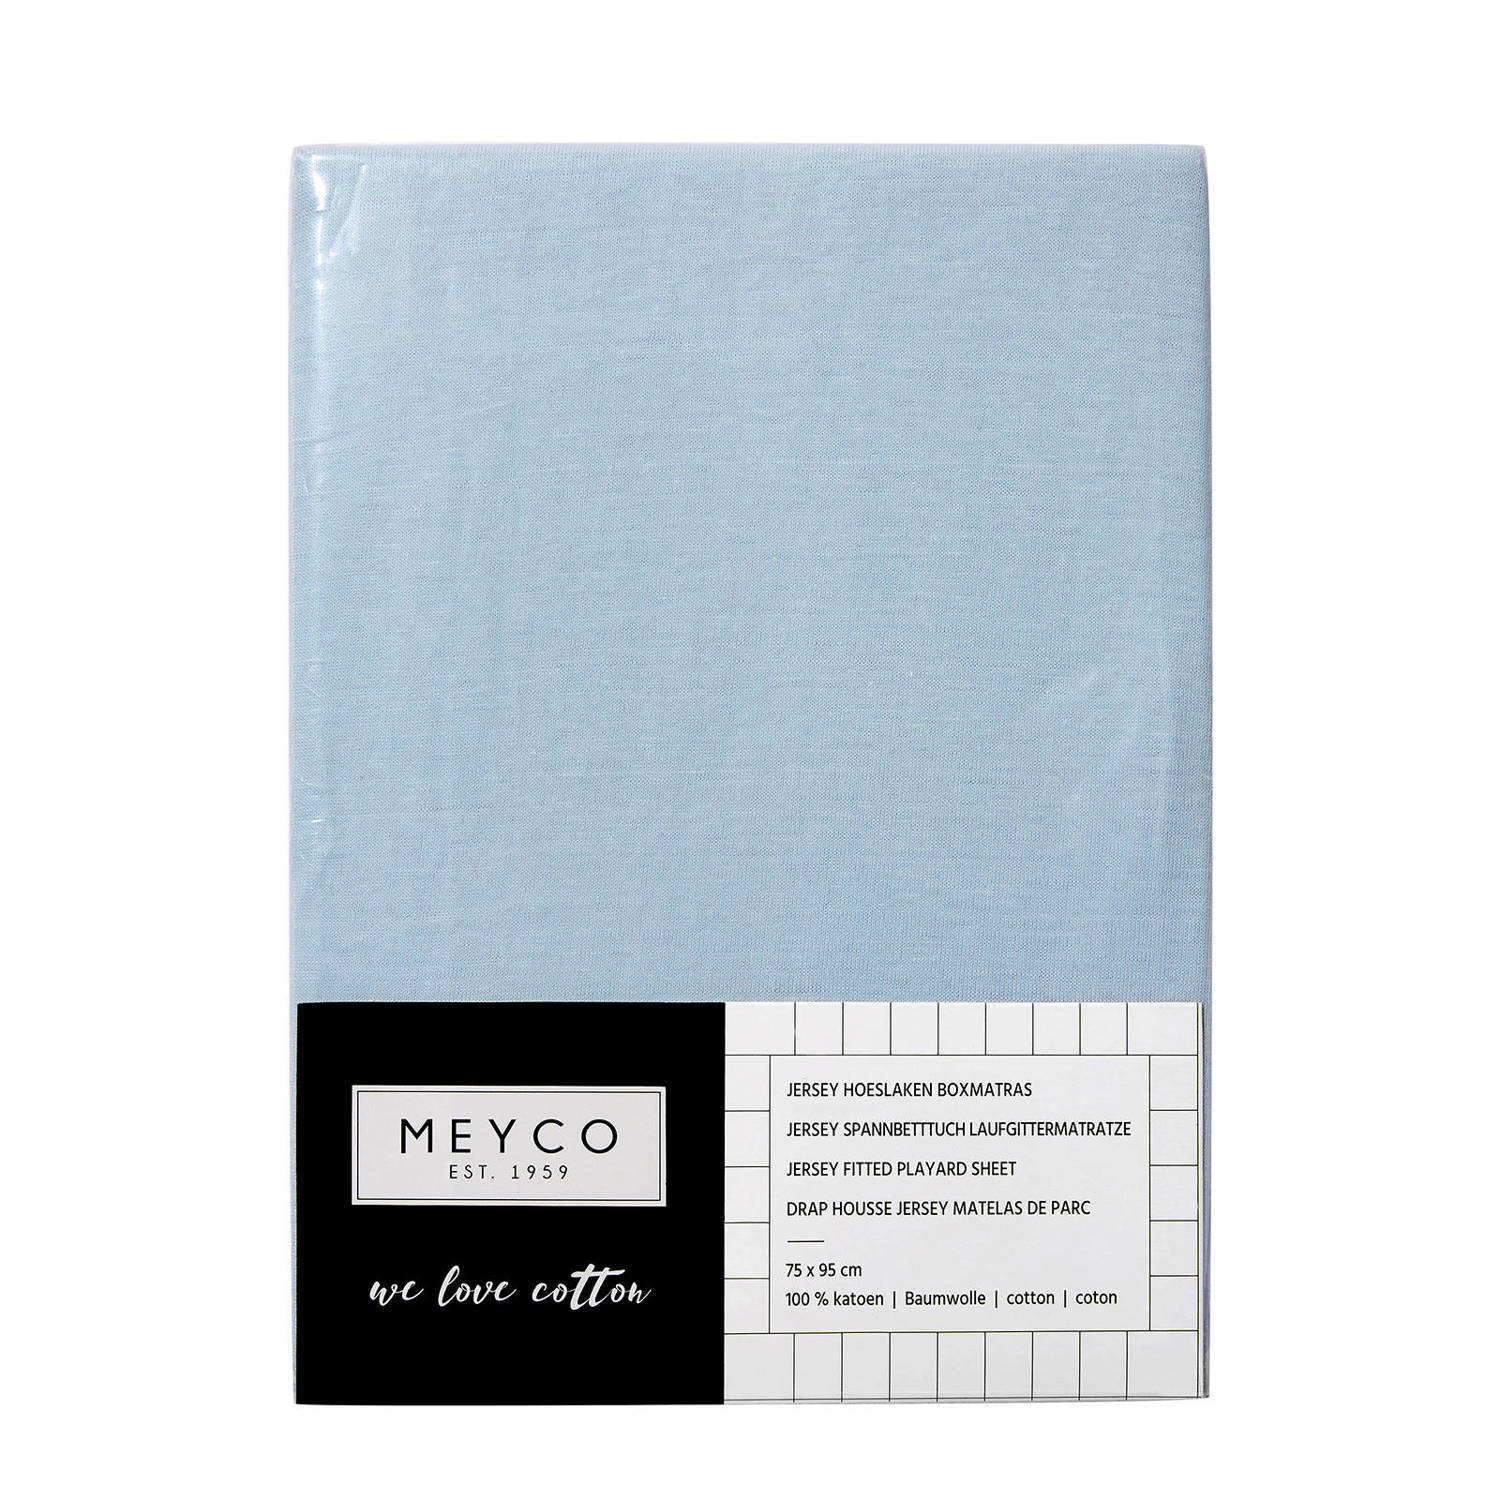 Meyco hoeslaken boxmatras 75x95 cm lichtblauw